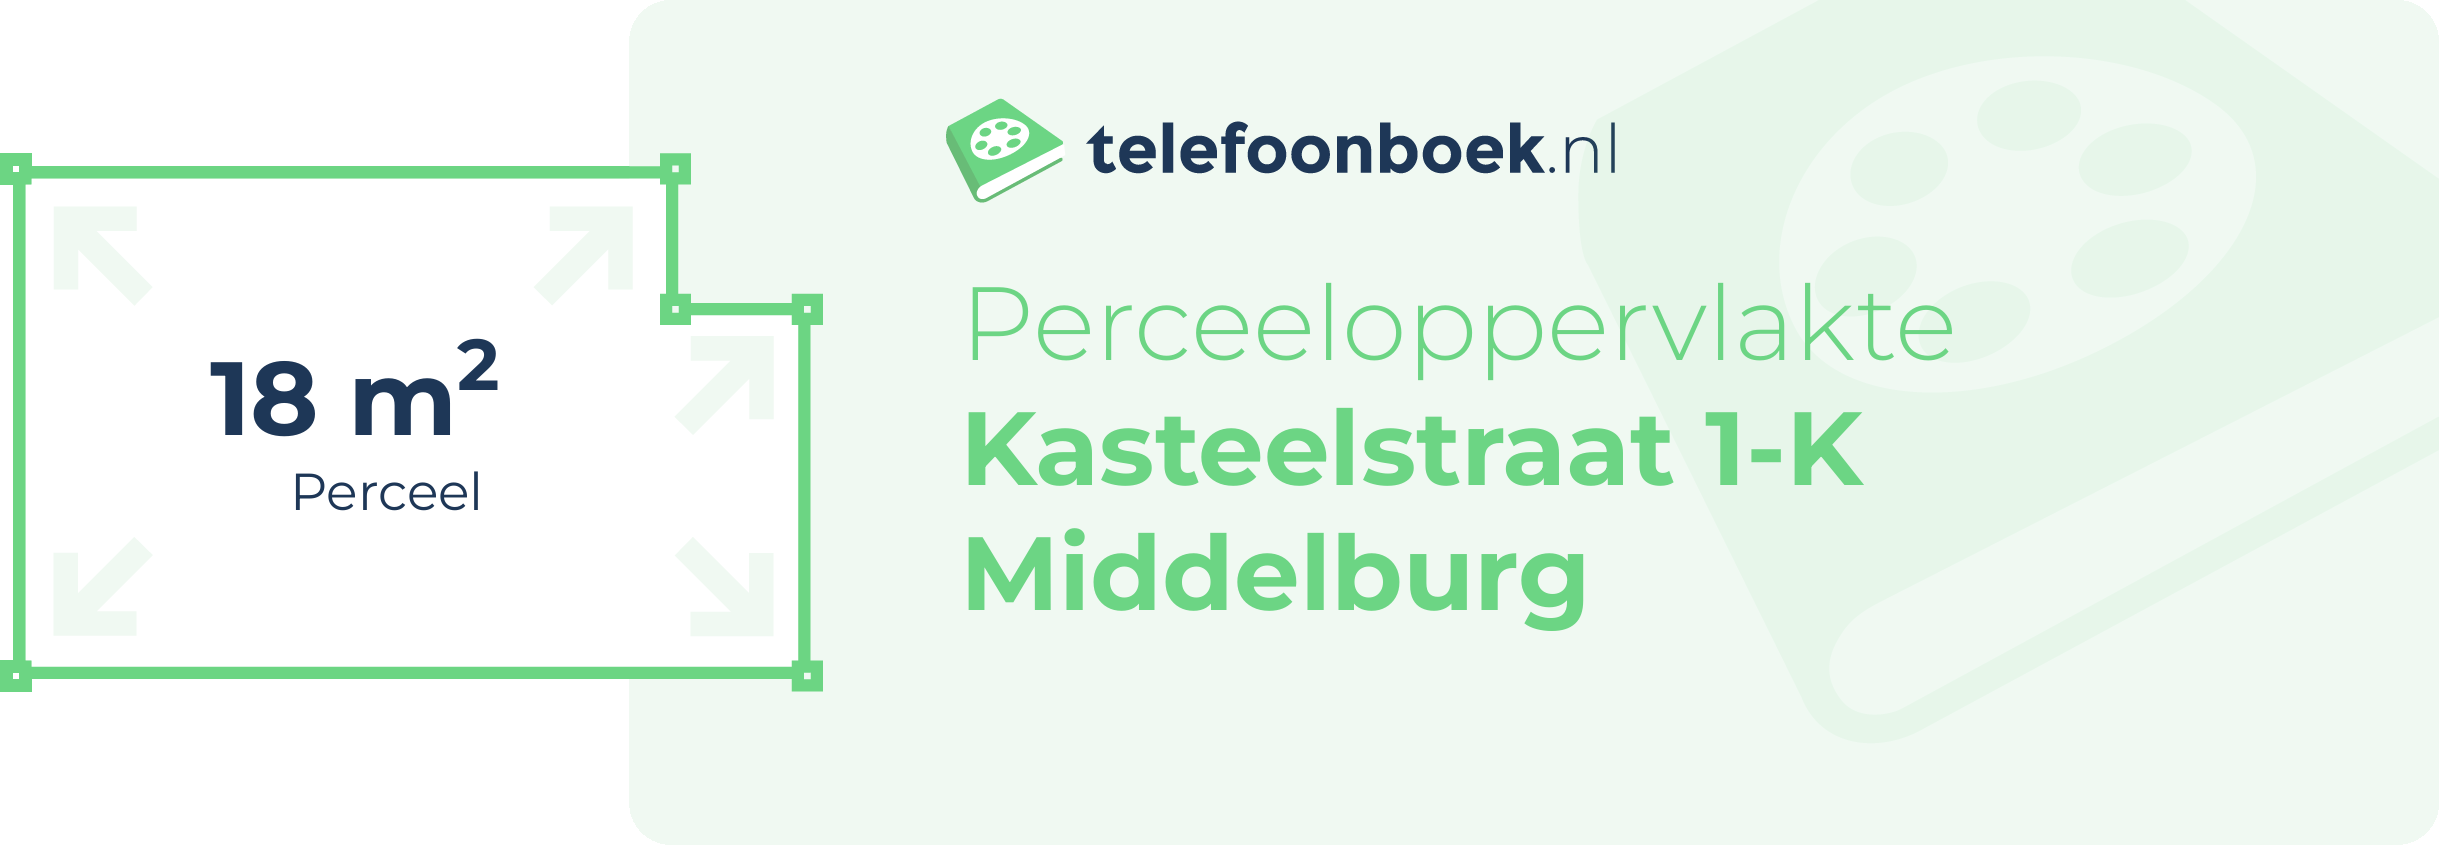 Perceeloppervlakte Kasteelstraat 1-K Middelburg